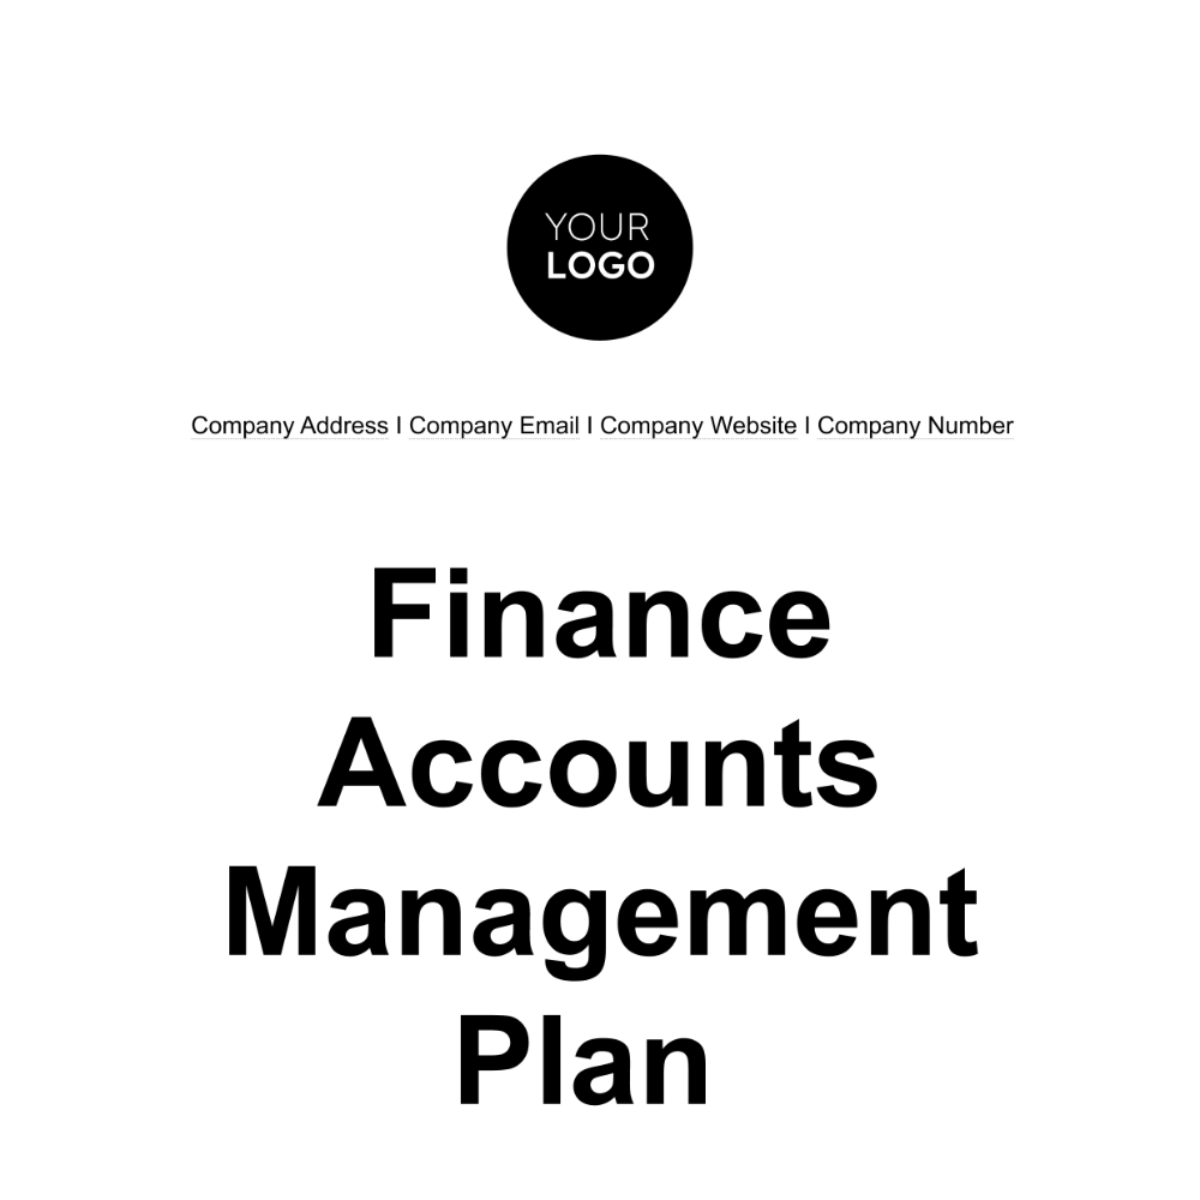 Free Finance Accounts Management Plan Template